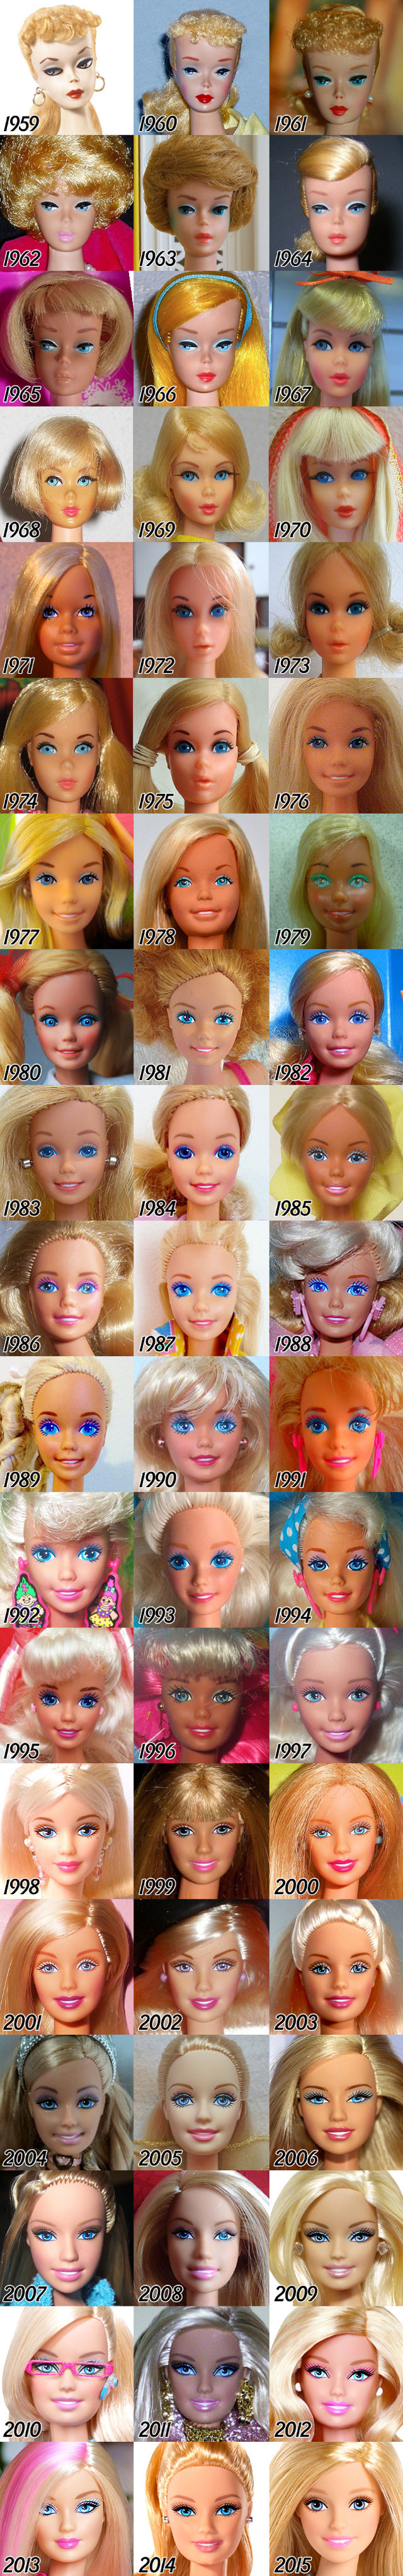 evolution_of_barbie